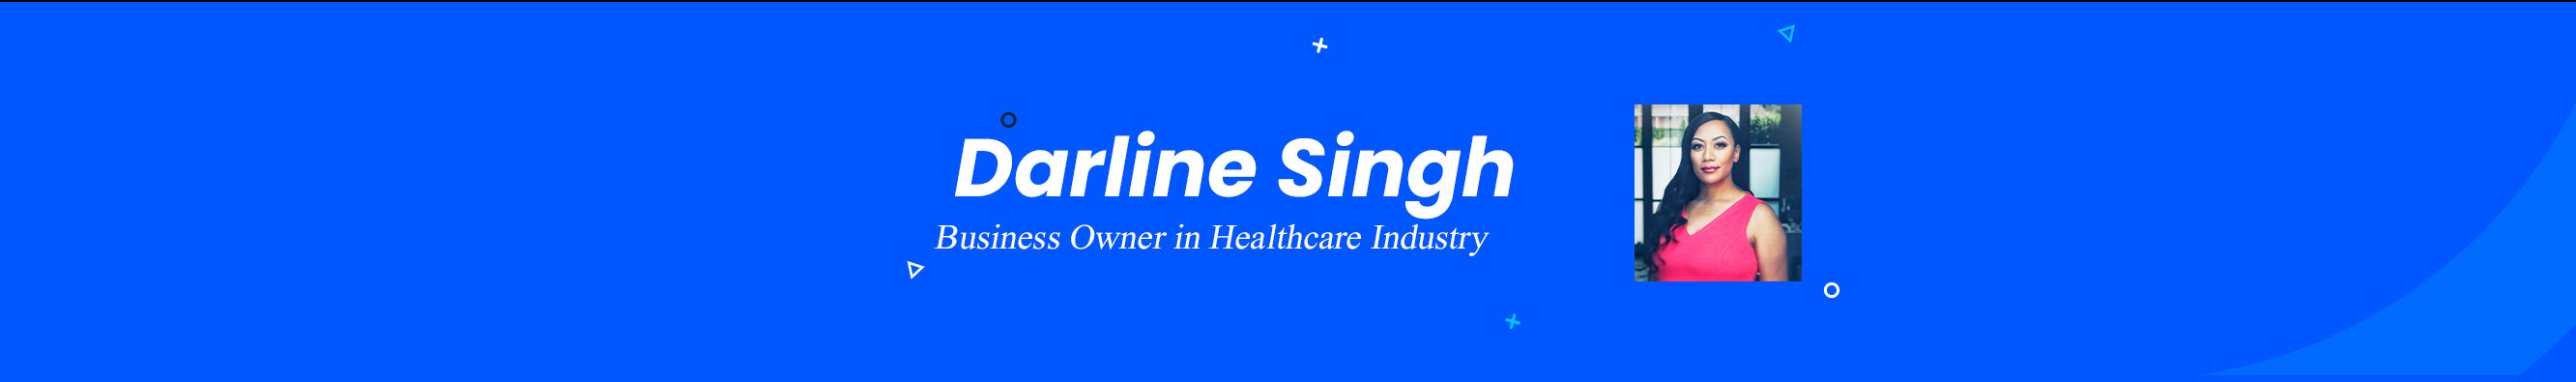 Darline Singh's profile banner